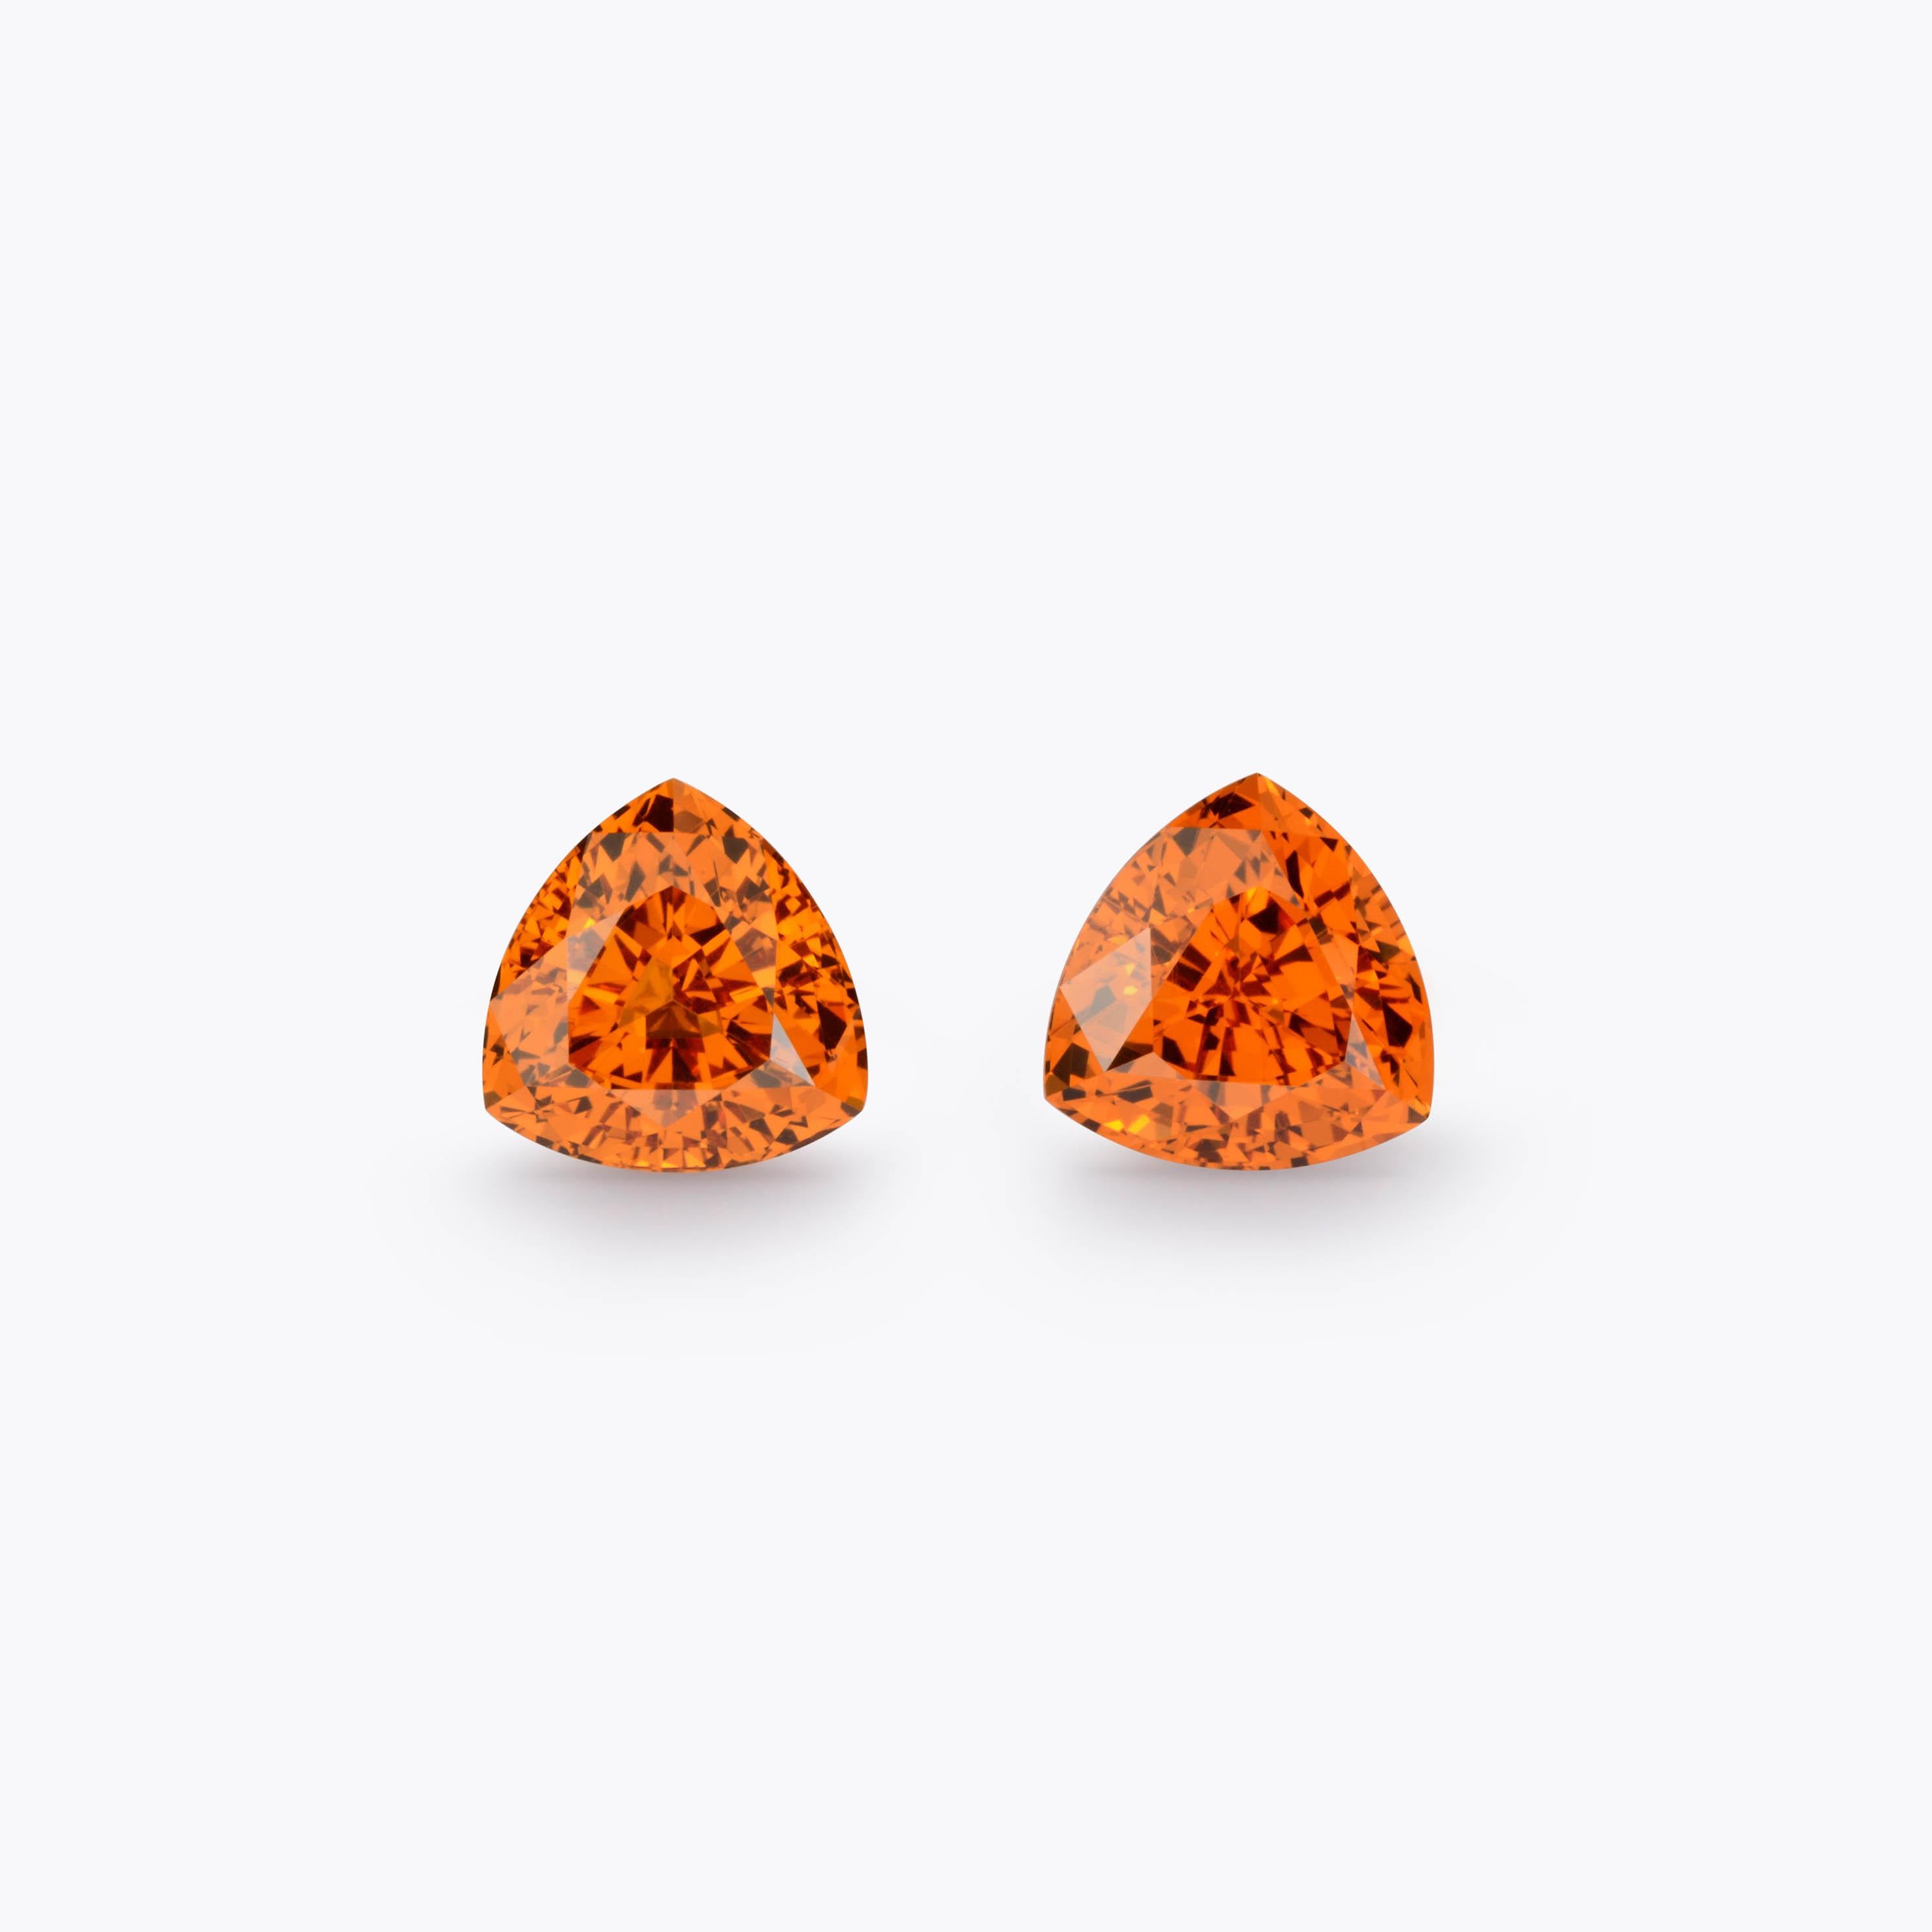 Contemporary Mandarin Garnet Earrings Pair 3.39 Carats Trillions Unmounted Loose Gemstones For Sale